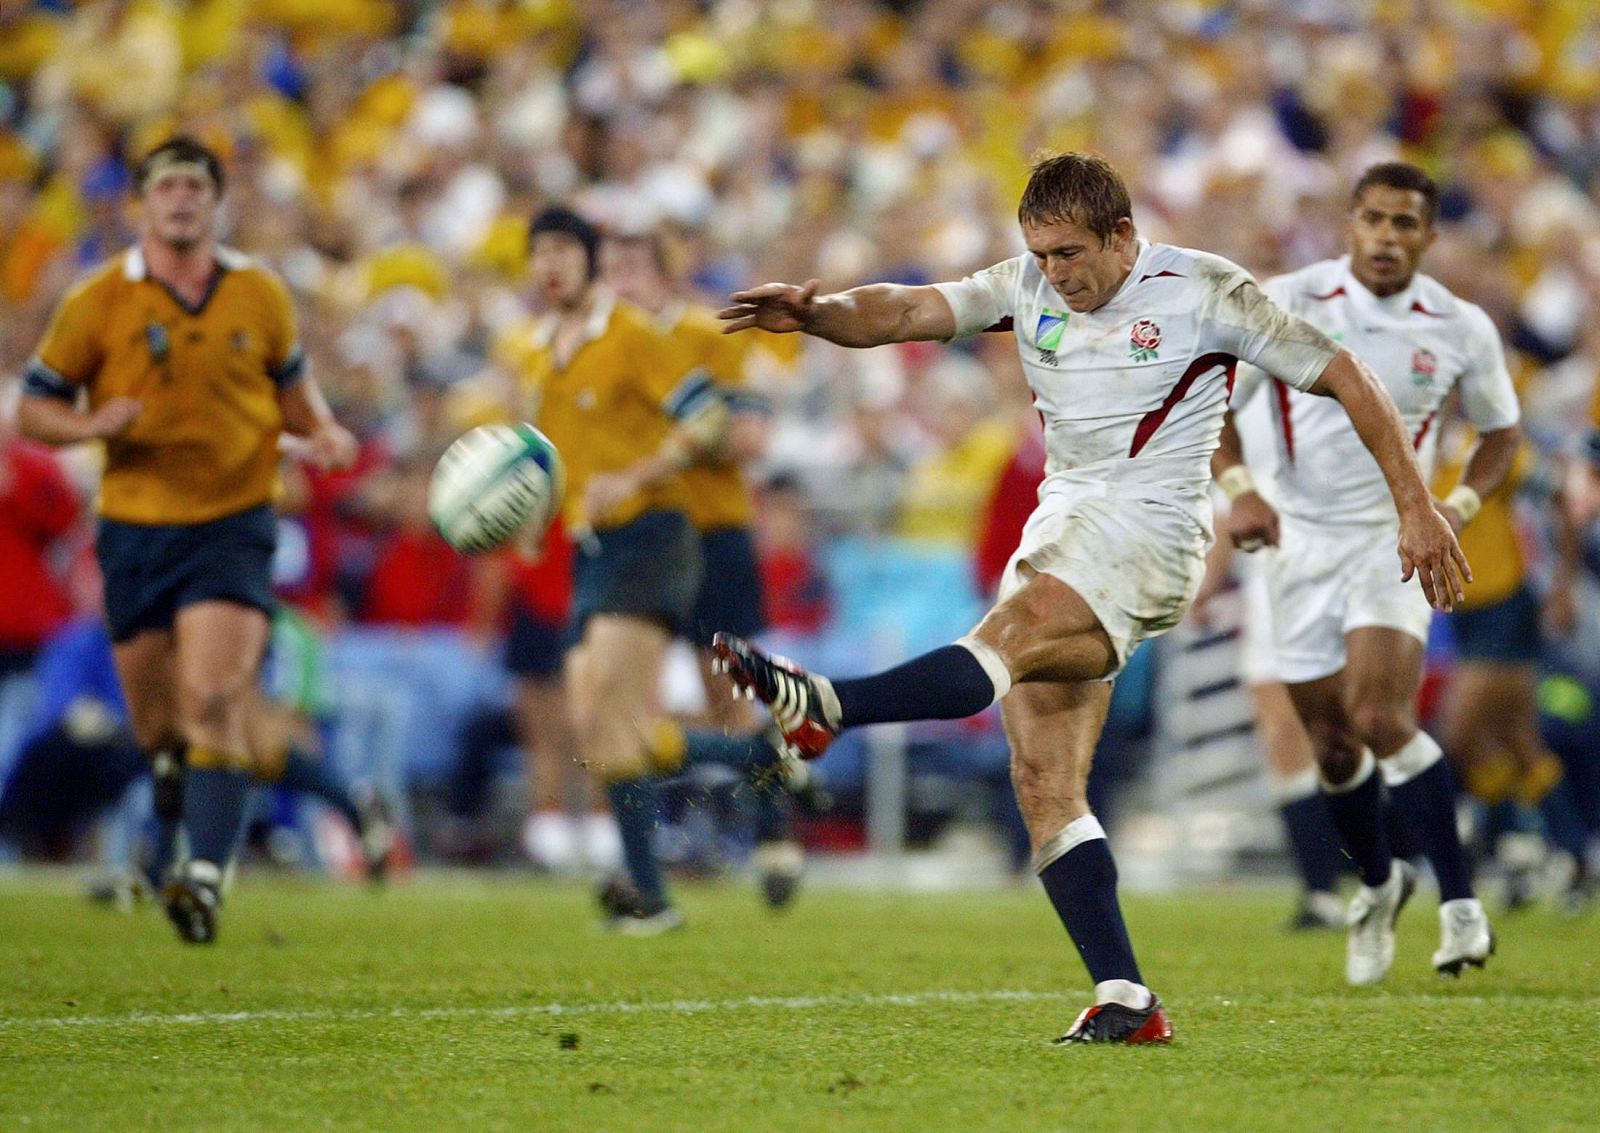 Imagen del apertura inglés Jonny Wilkinson durante la final del Mundial de Australia de 2003.